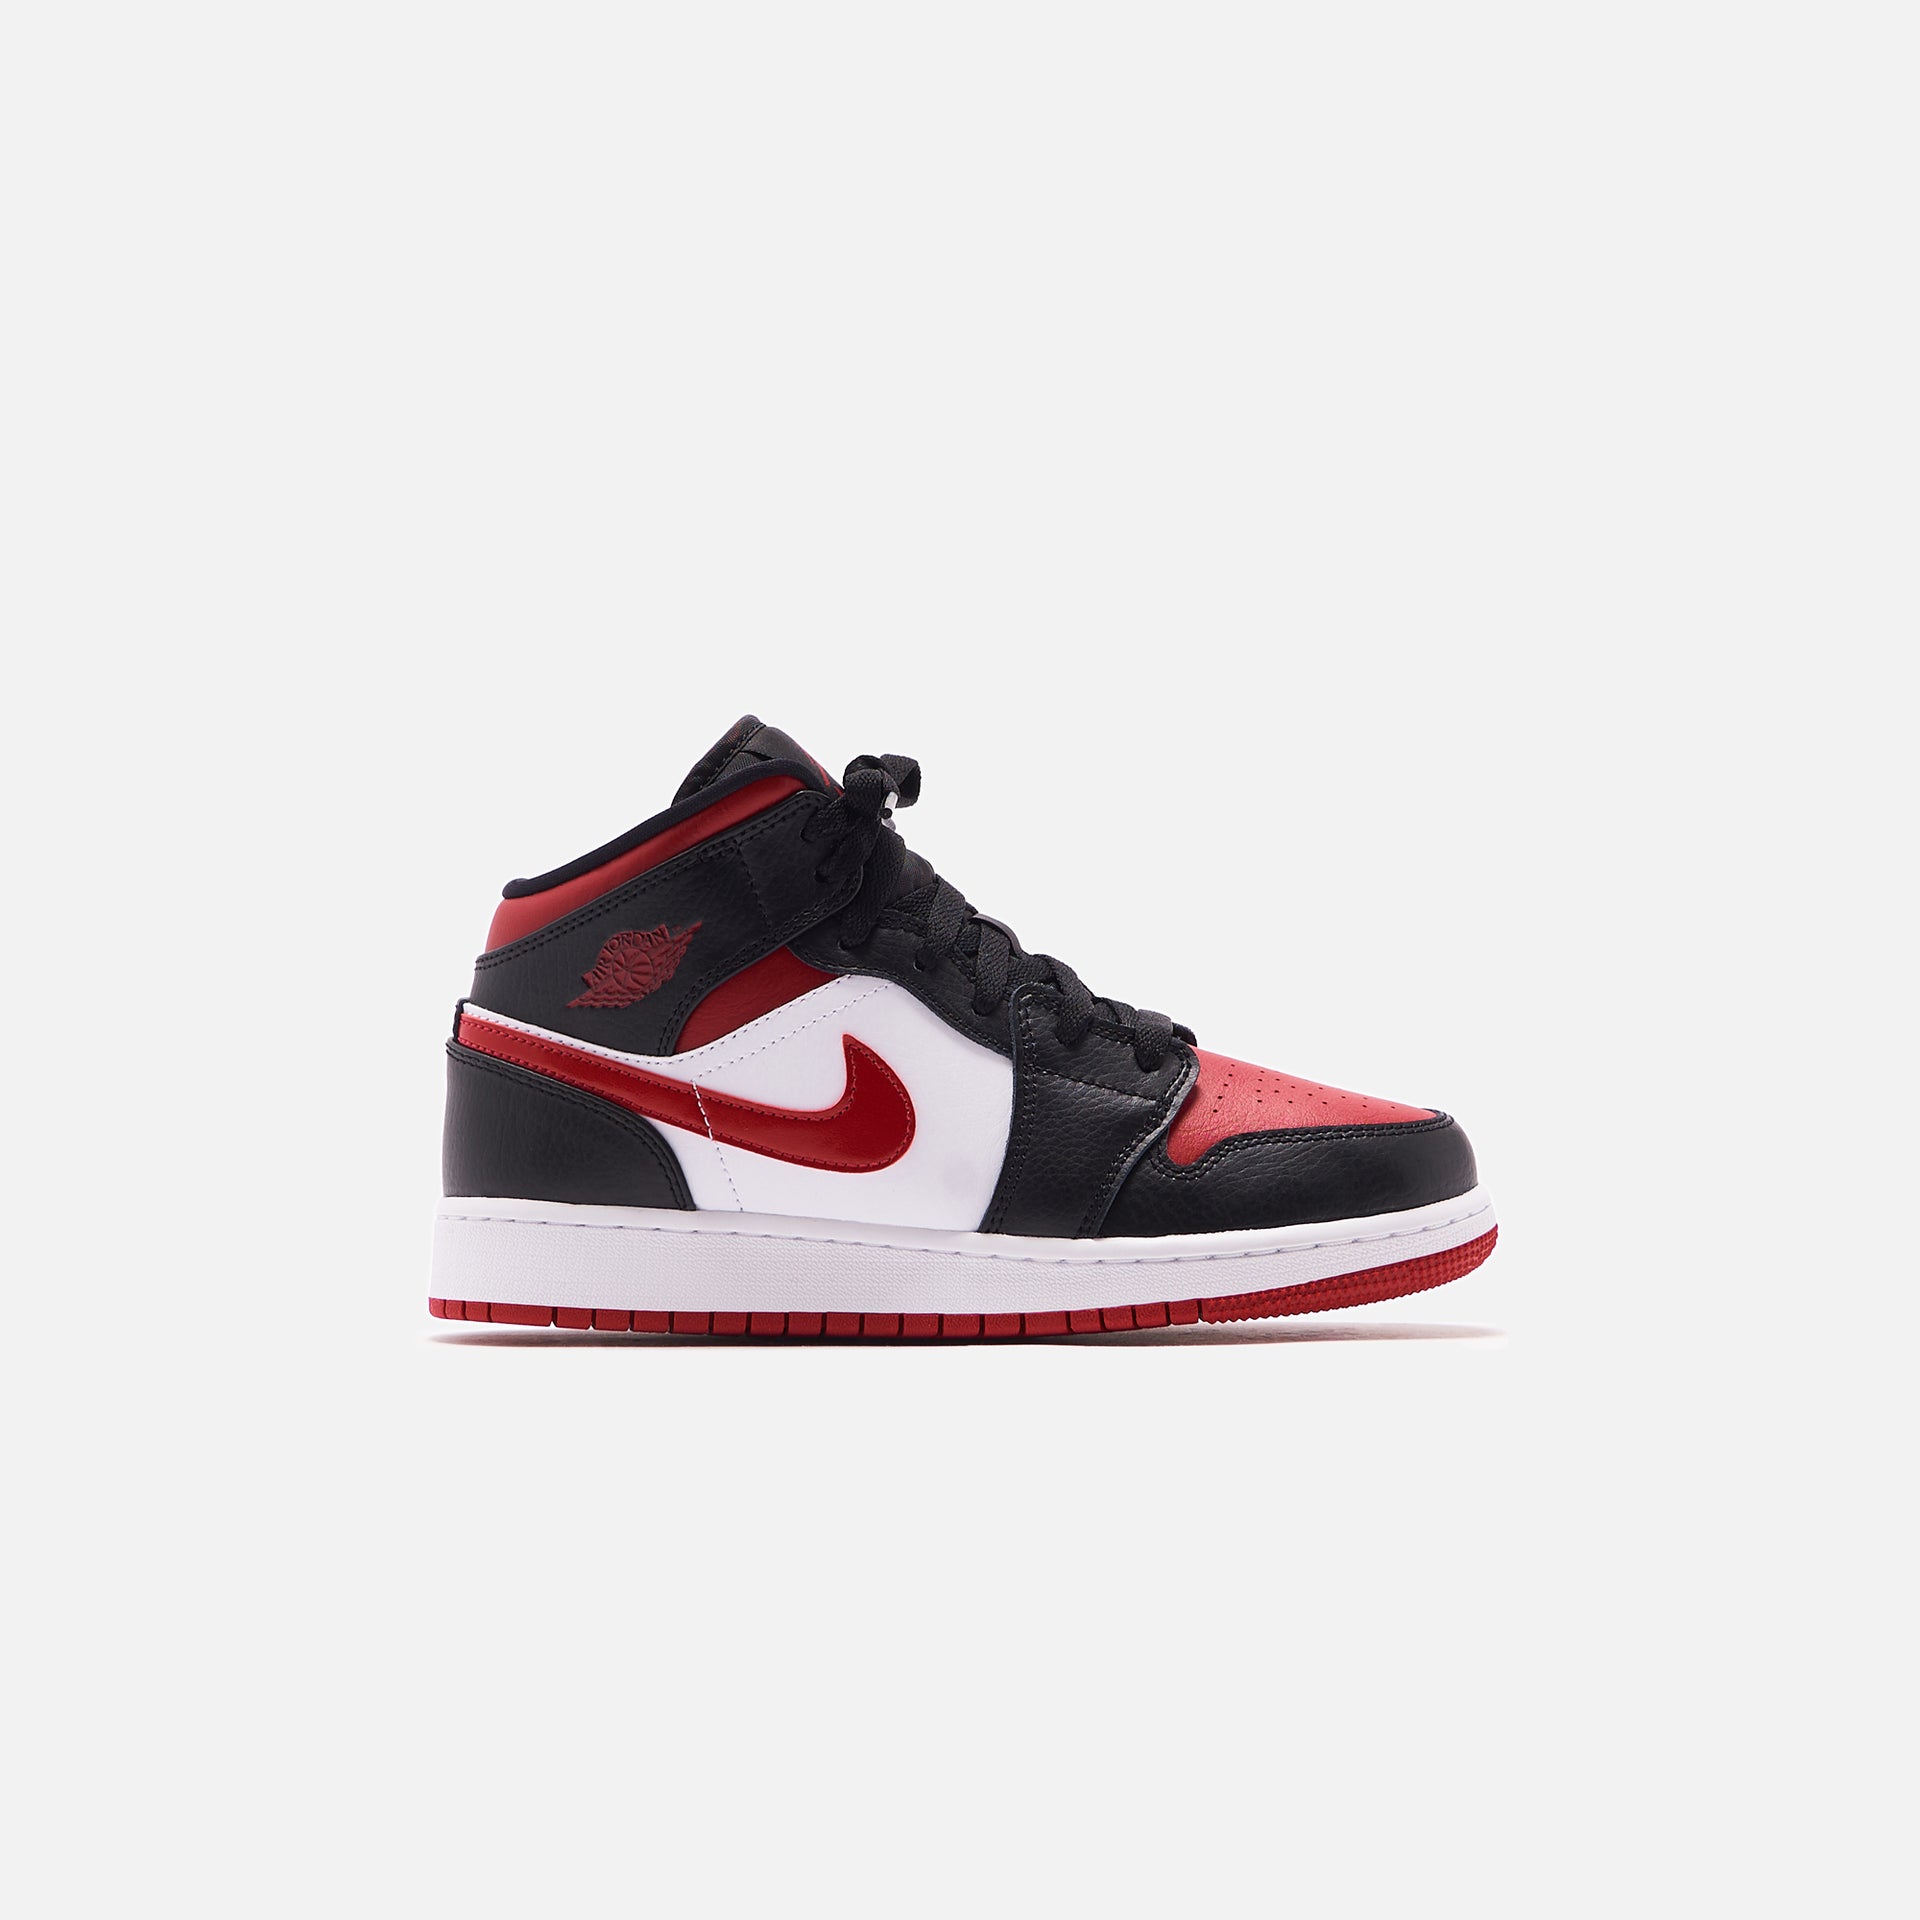 Nike Air Jordan 1 Mid - Black / Fire Red / White